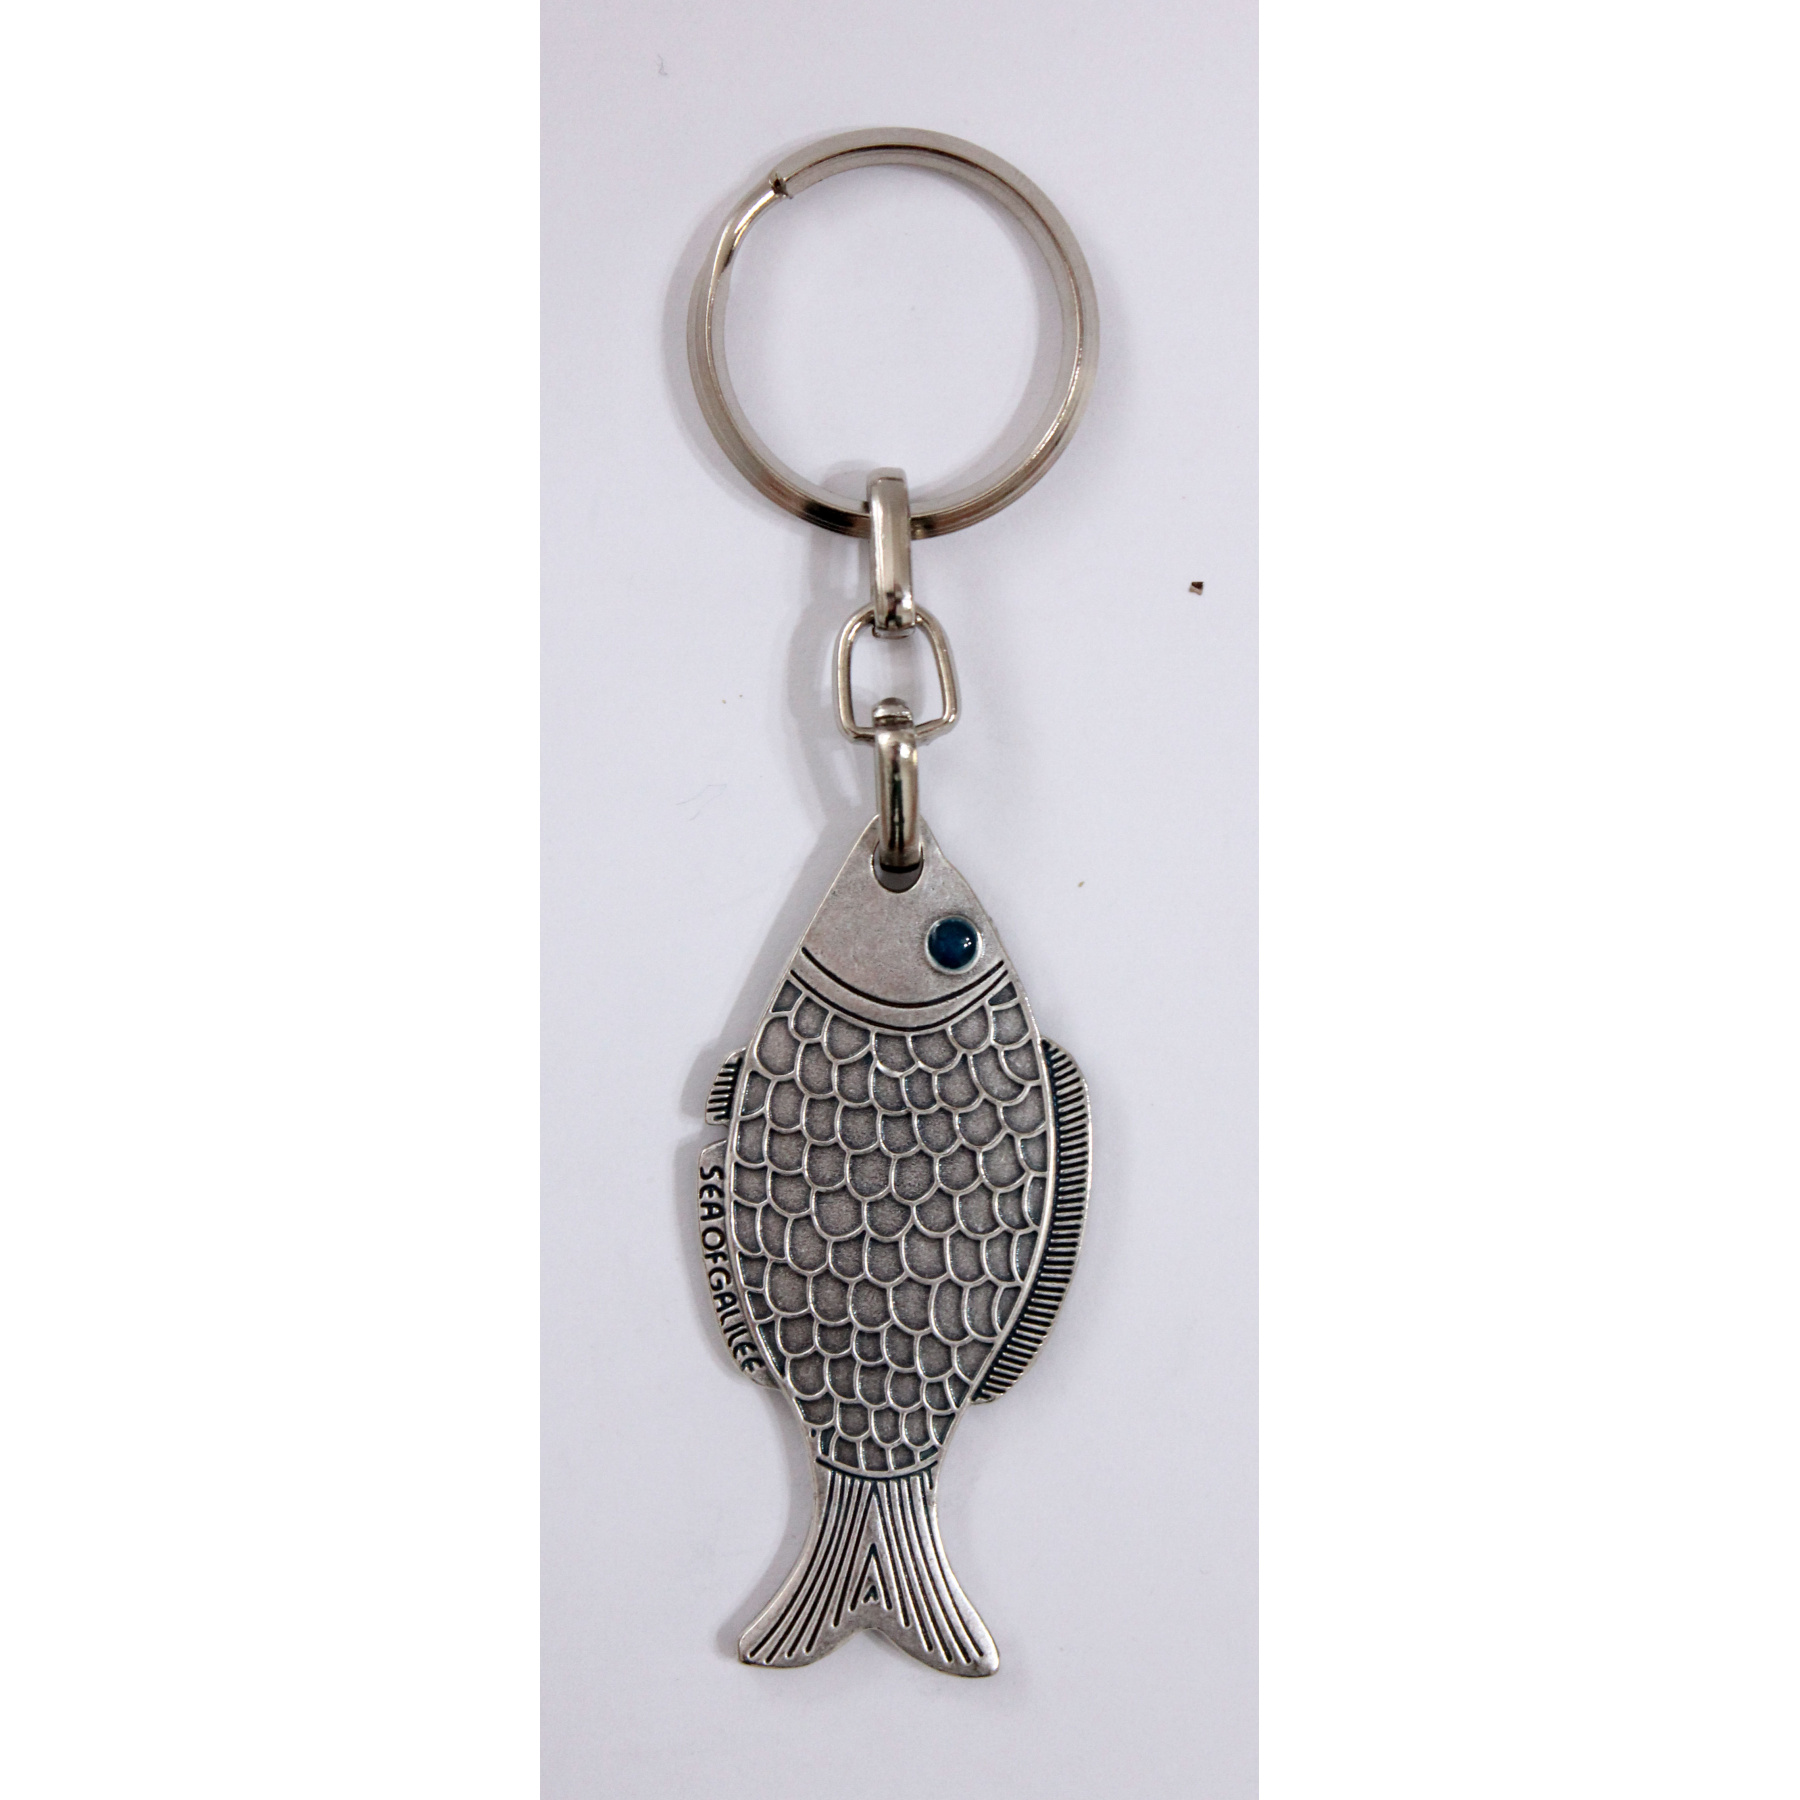 Christian Fish symbol keychain